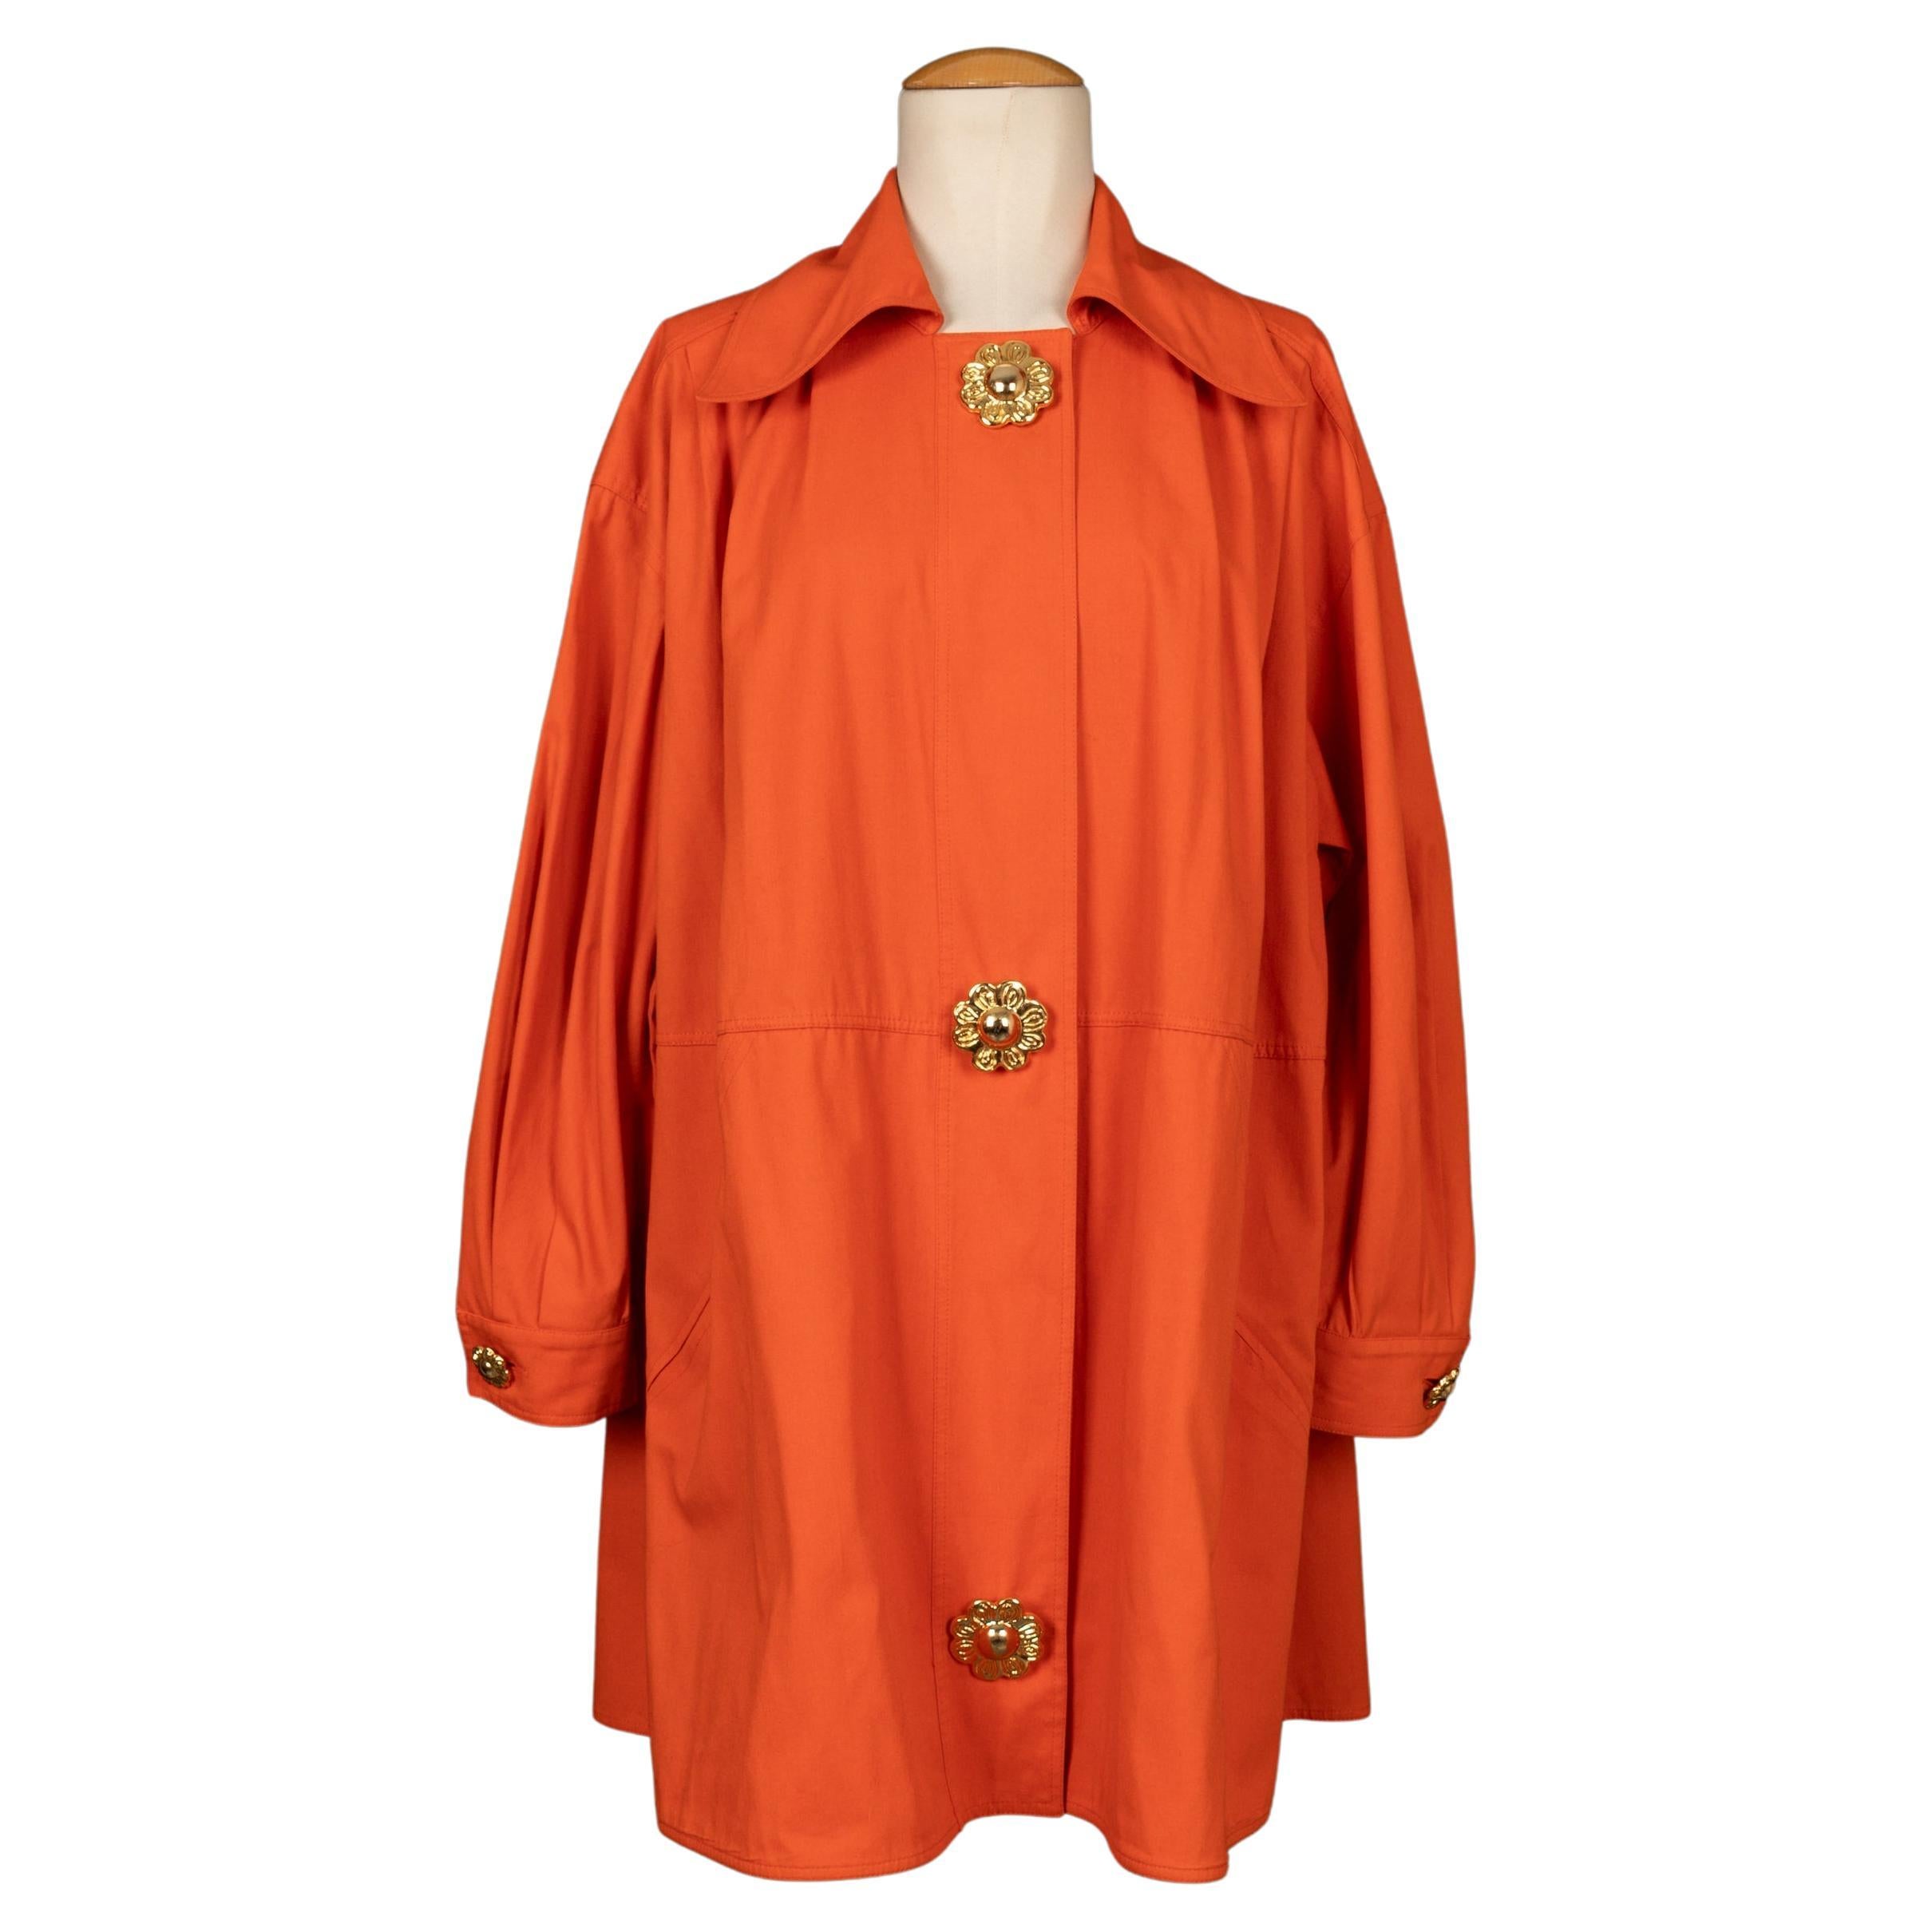 Christian Lacroix Orange Cotton Coat Ornamented with Golden Metal Buttons